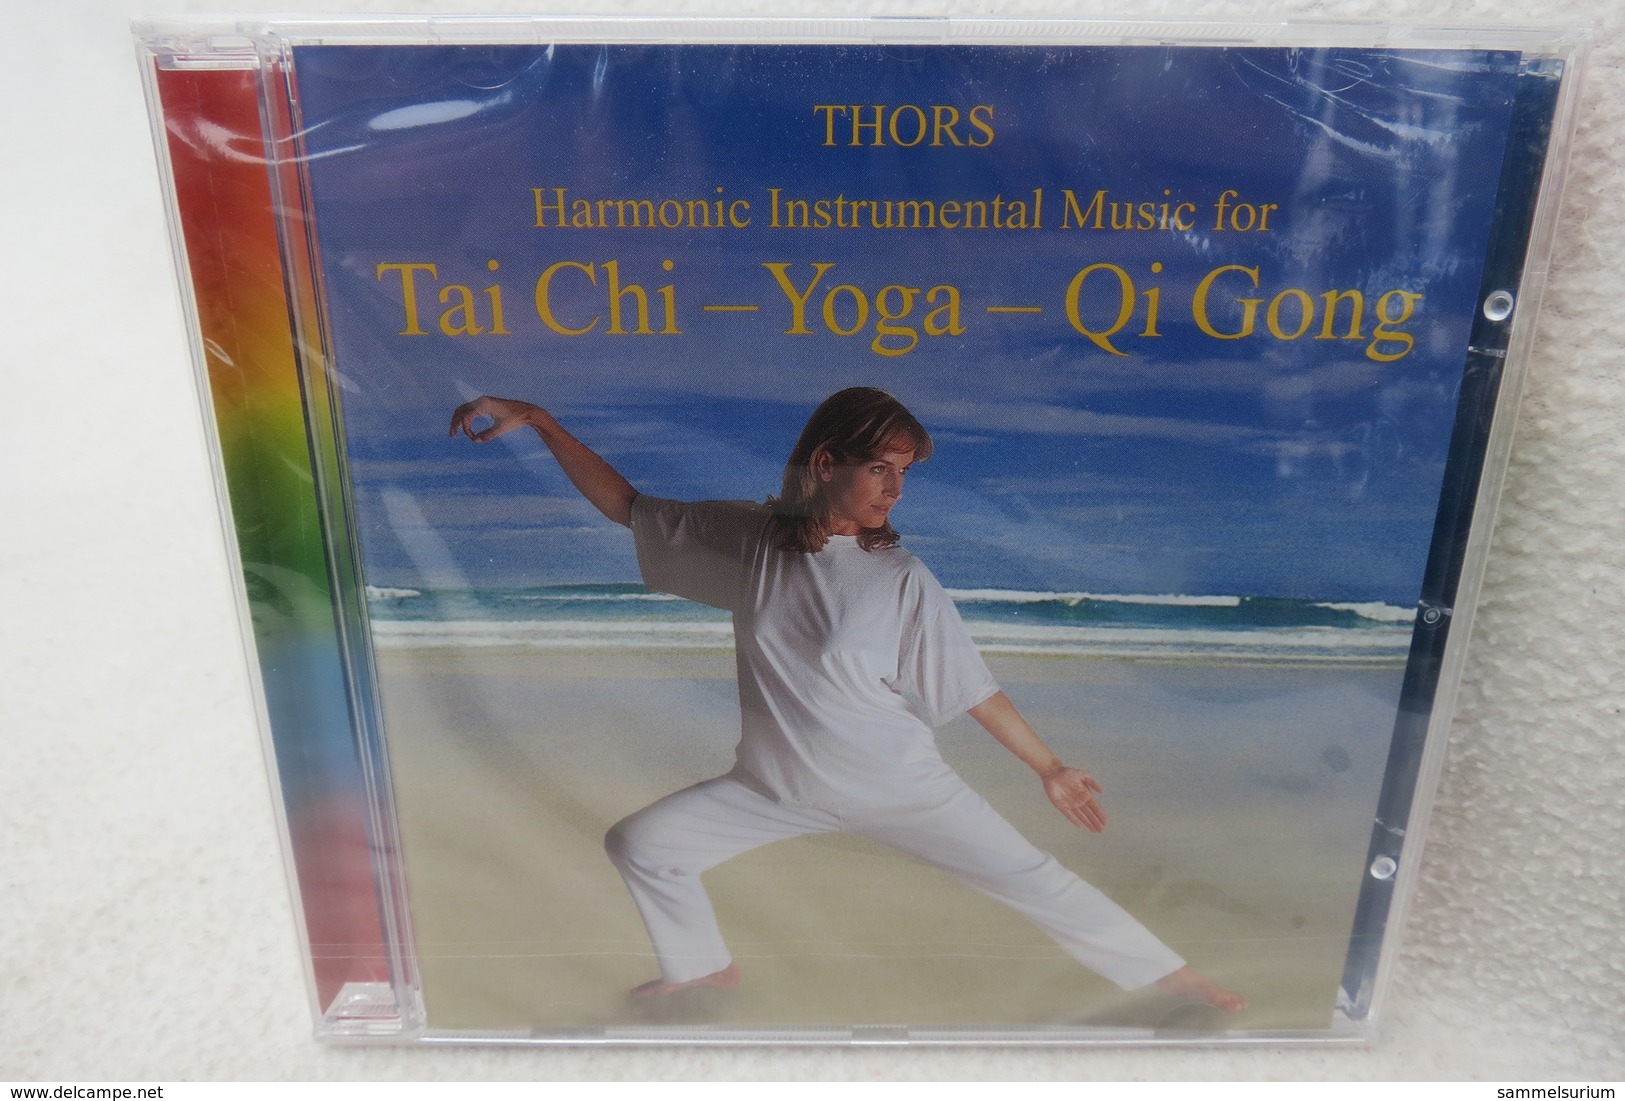 CD "Thors" Tai Chi - Yoga - Qi Gong" Harmonic Instrumental Music (noch Orig. Eingeschweißt) - Instrumentaal